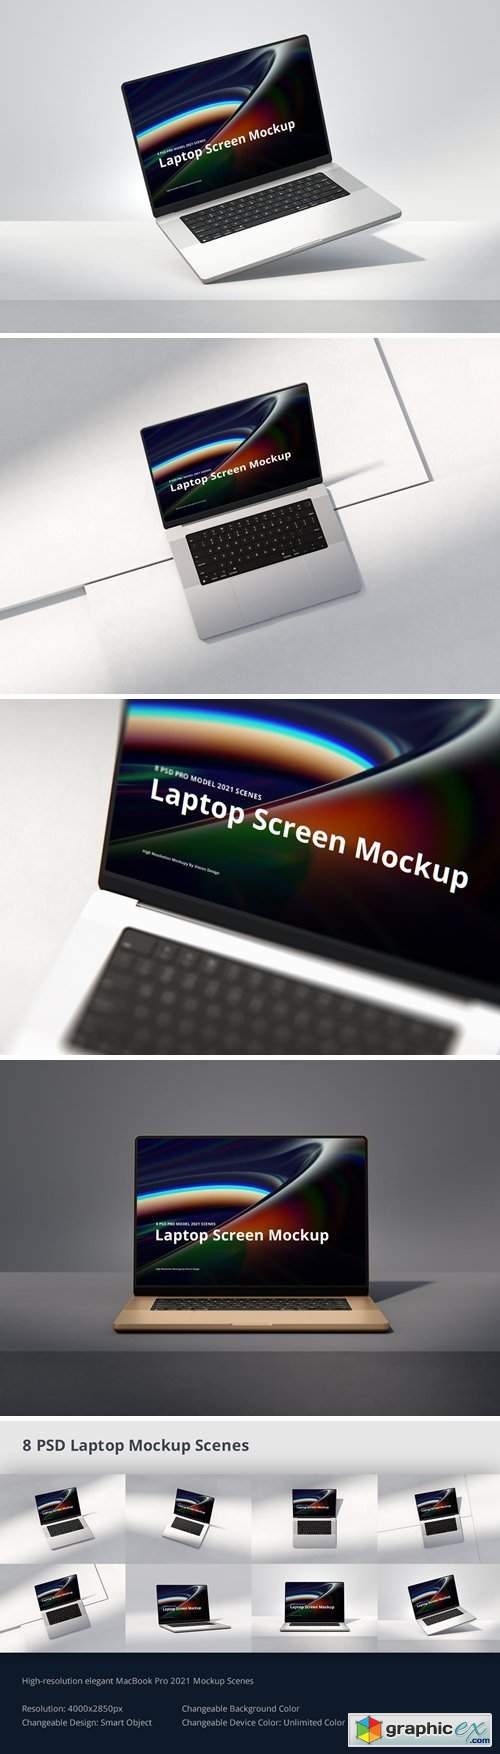 Laptop Pro Mockup Scenes 2021 